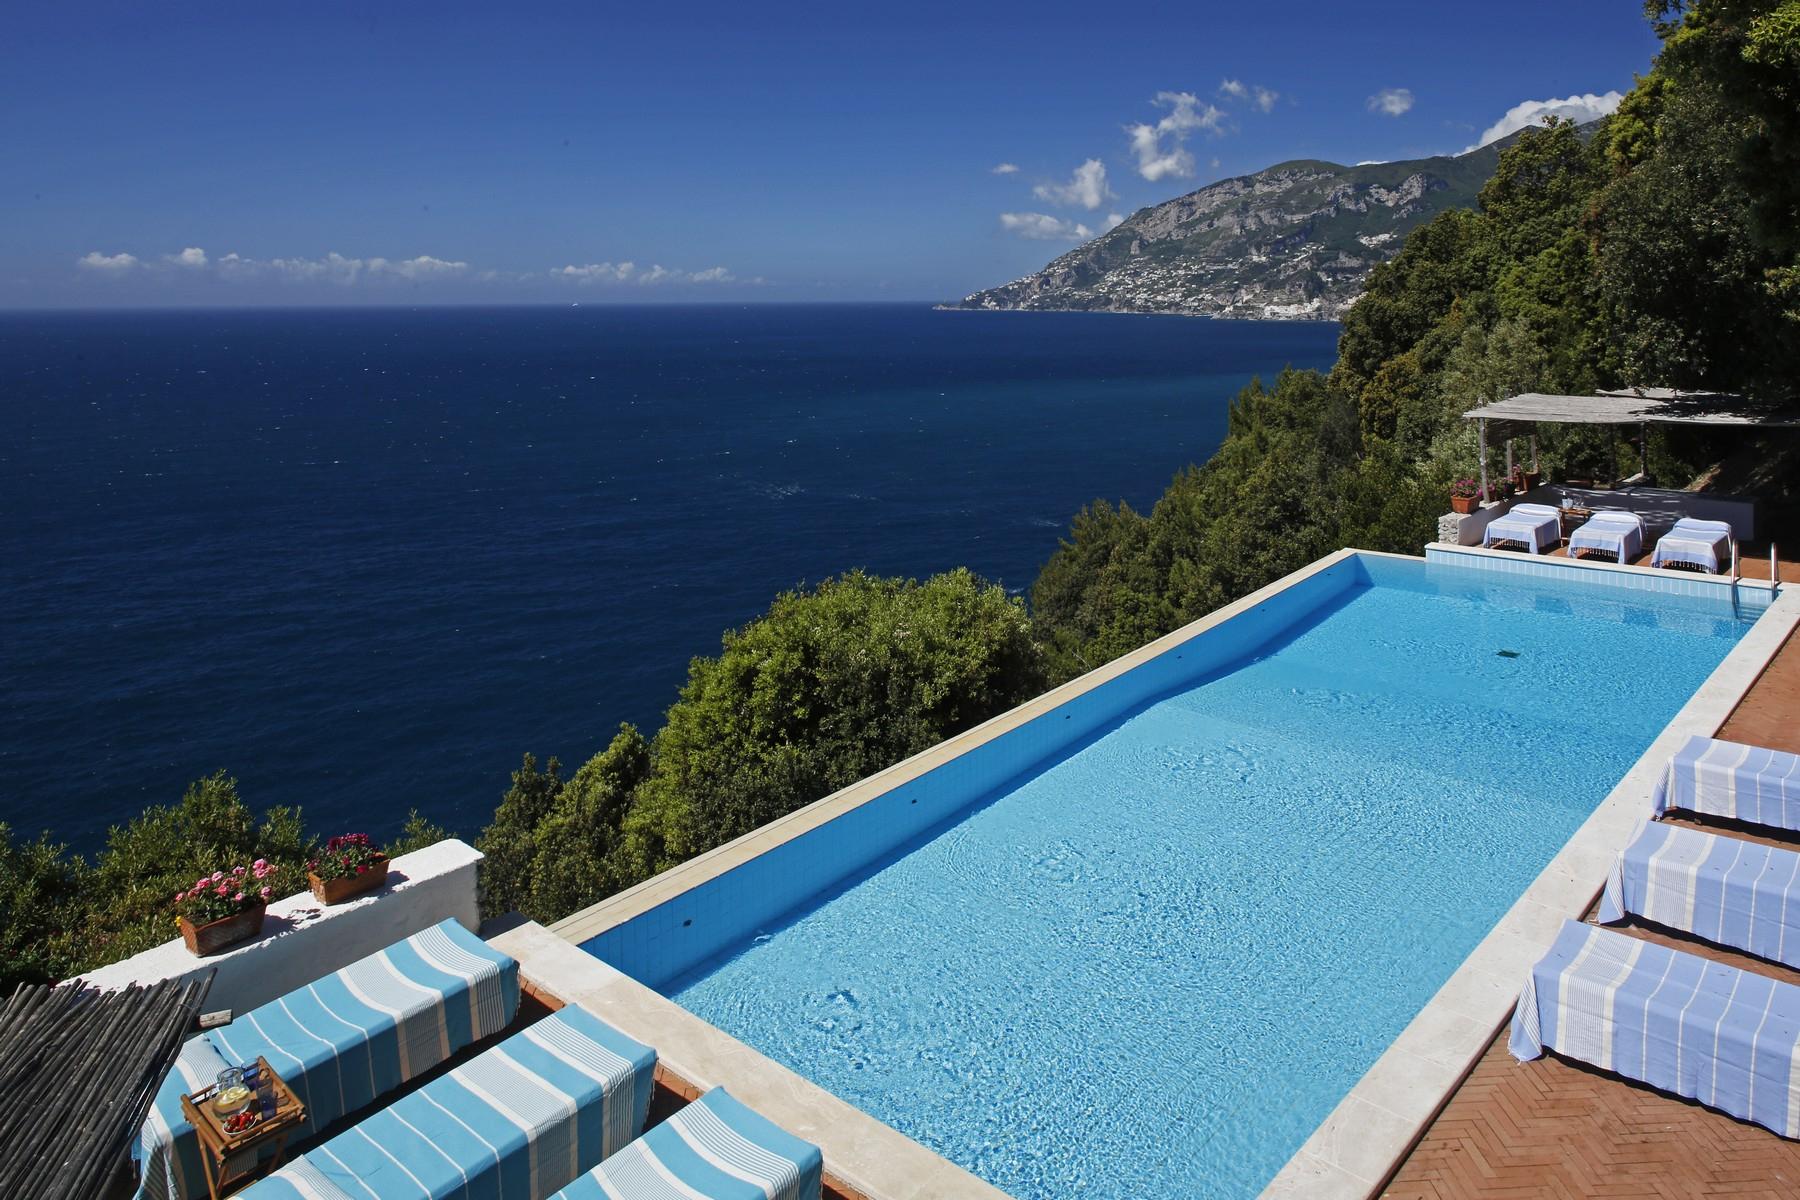 Villa pied dans l'eau on the Amalfi Coast - 5